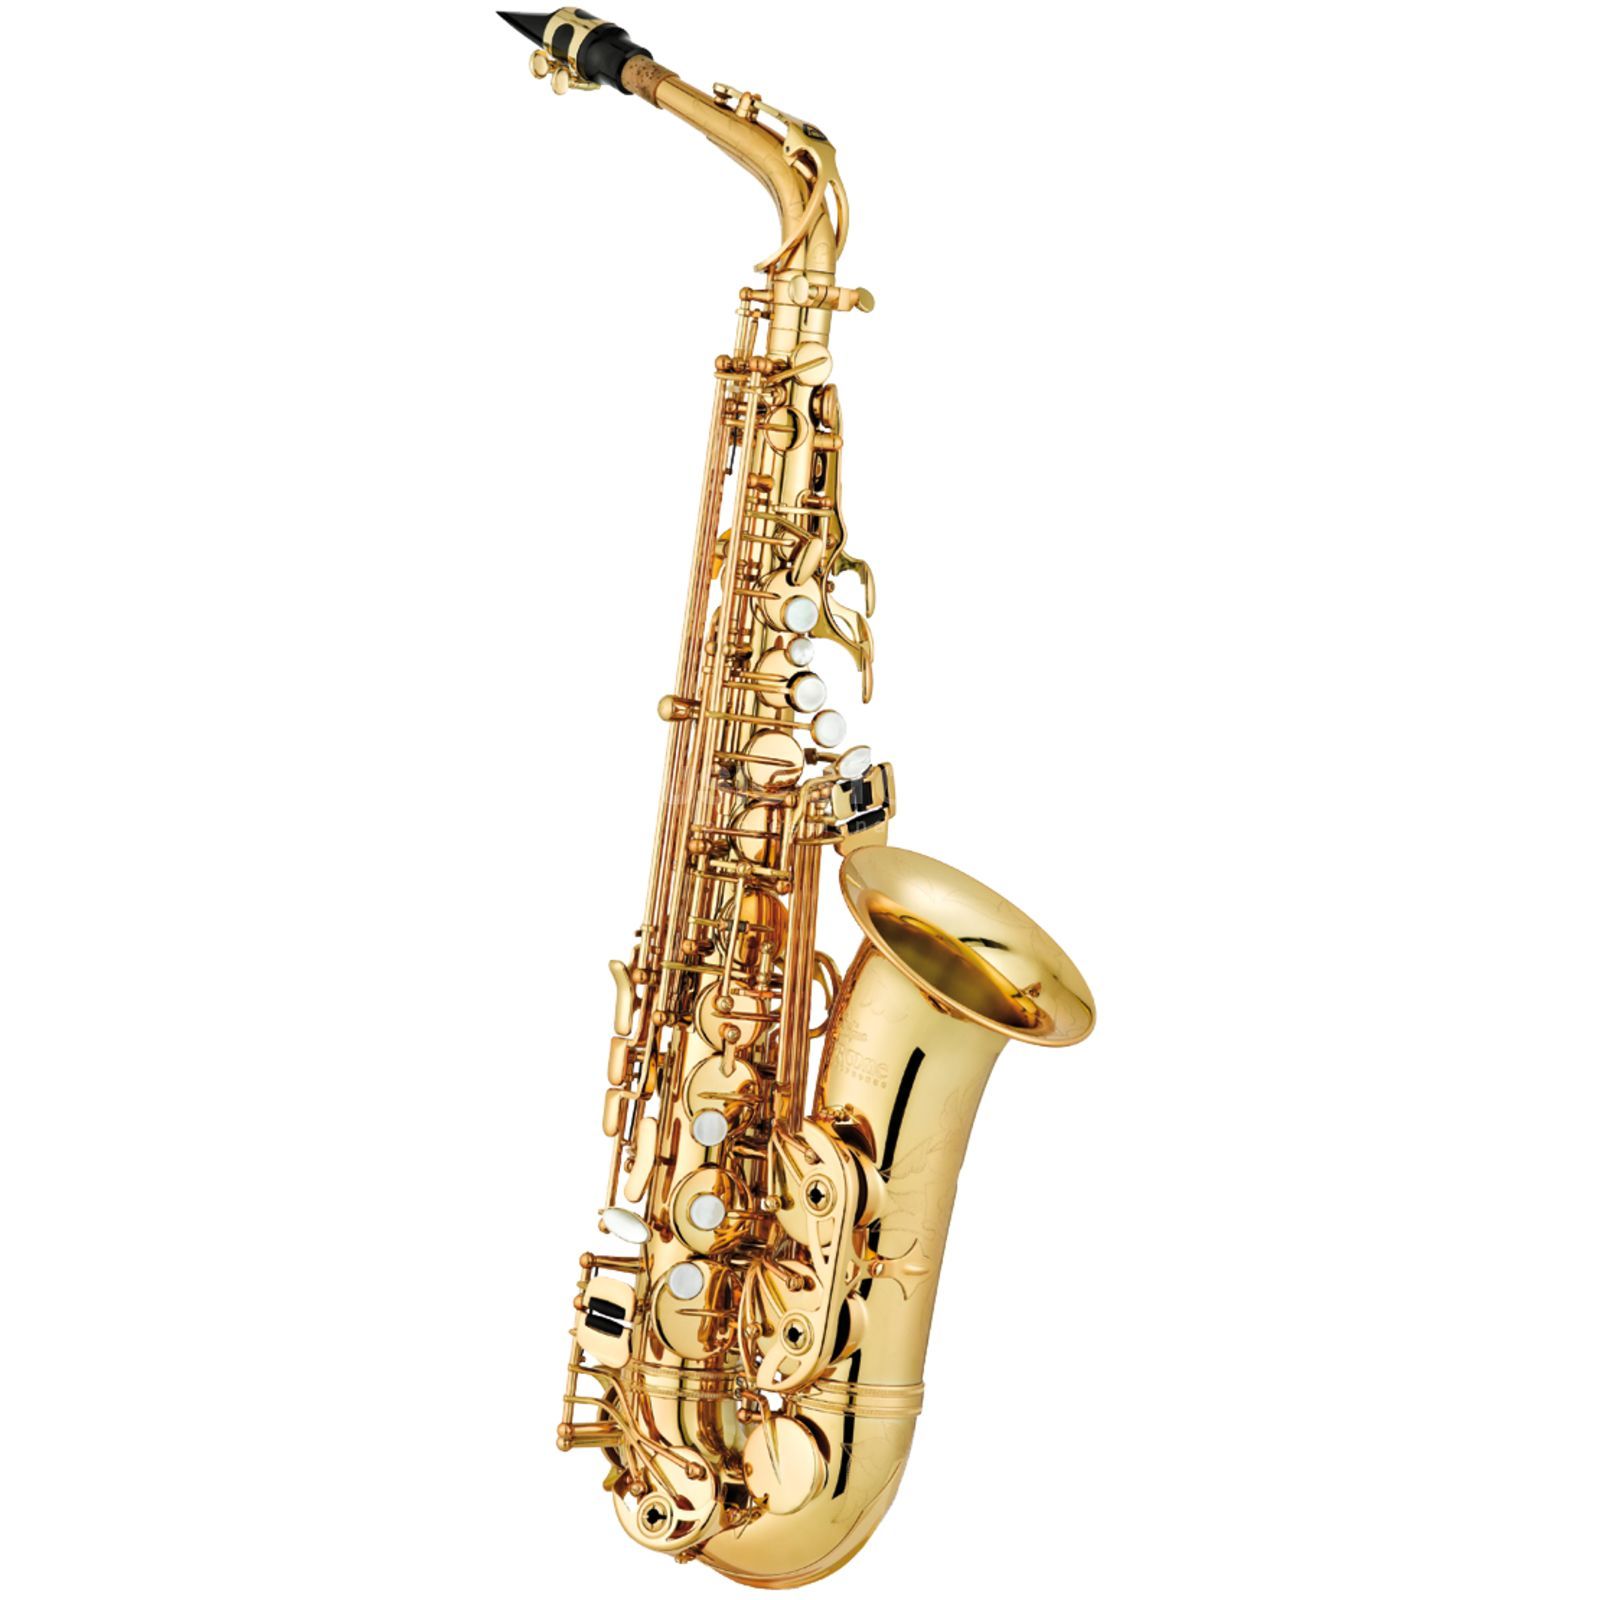 Das Alt-Saxophon